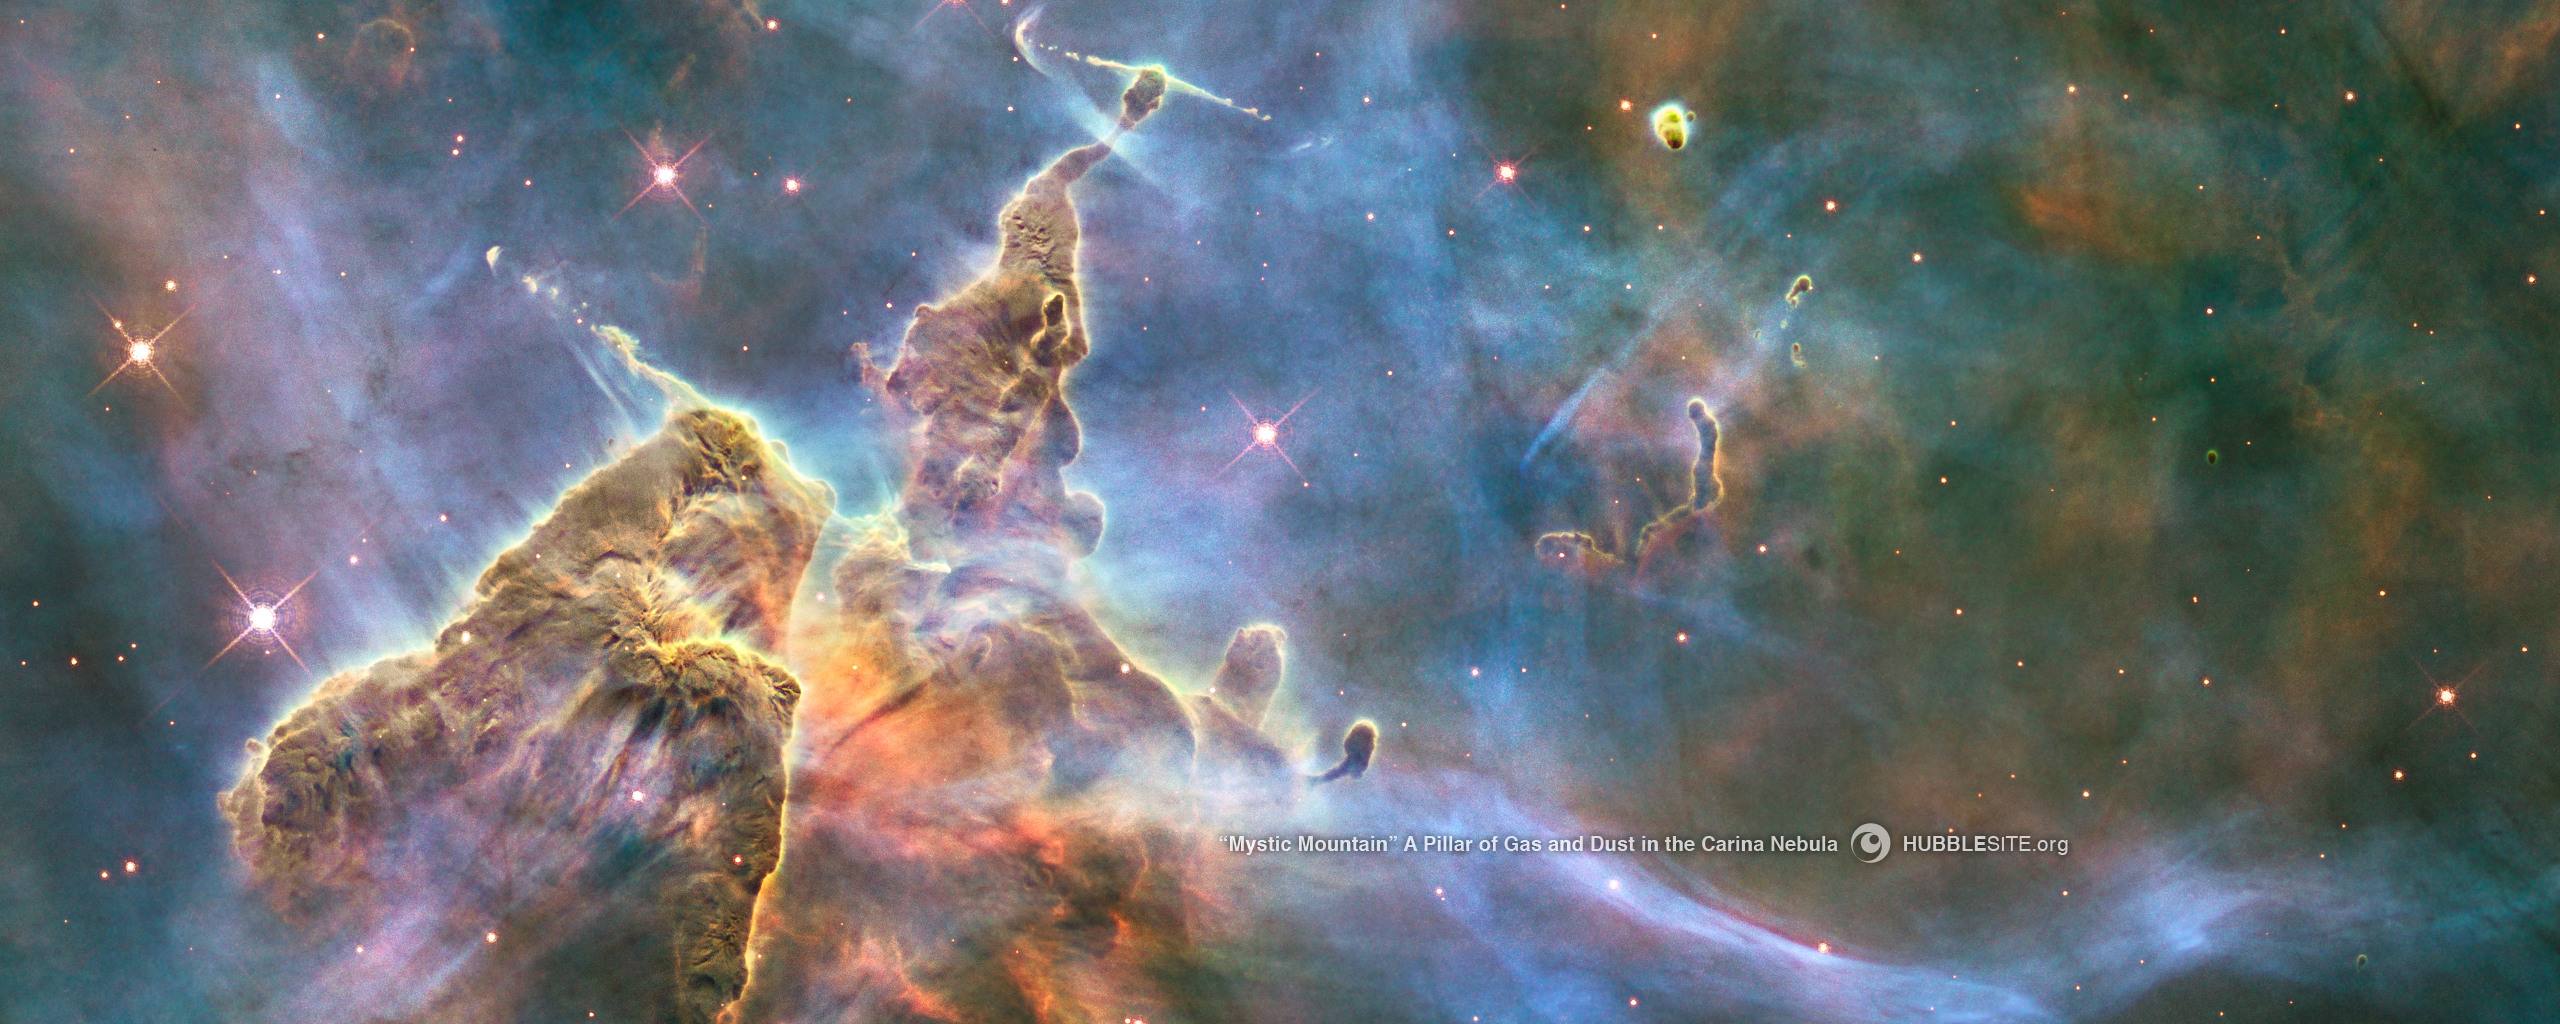 wallpaper url,nebel,himmel,weltraum,astronomisches objekt,atmosphäre